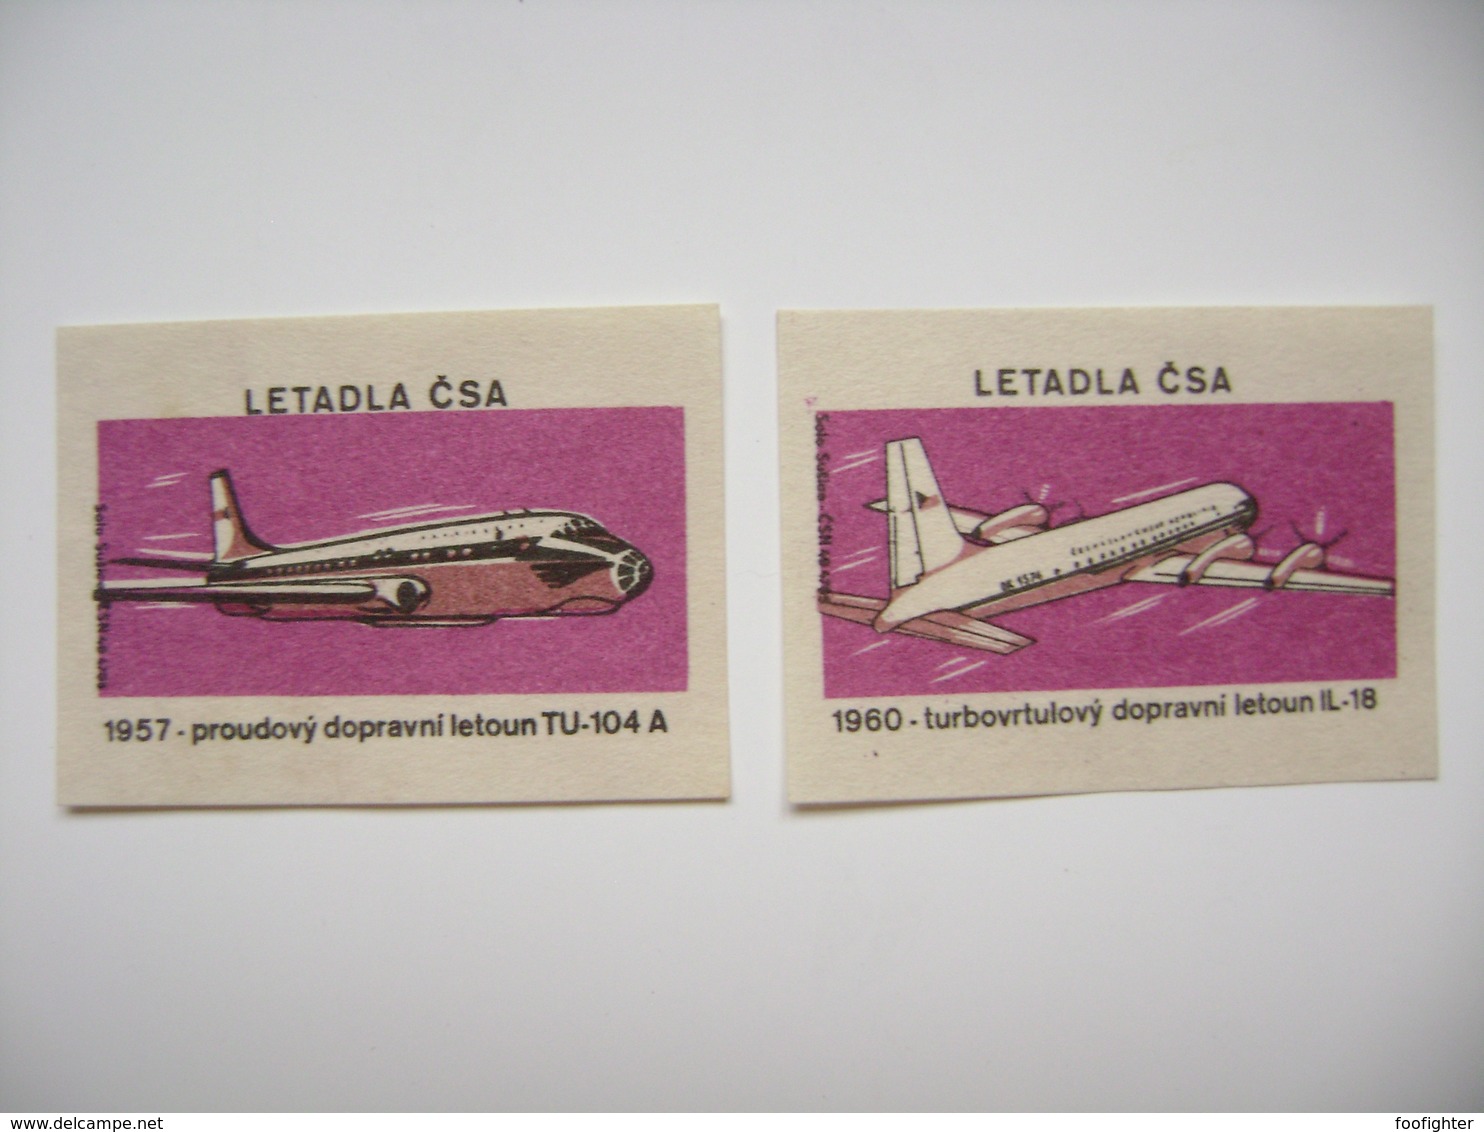 Czechoslovakia series 24 matchbox label 1964 - Czechoslovak airplanes - history of Czech aviation